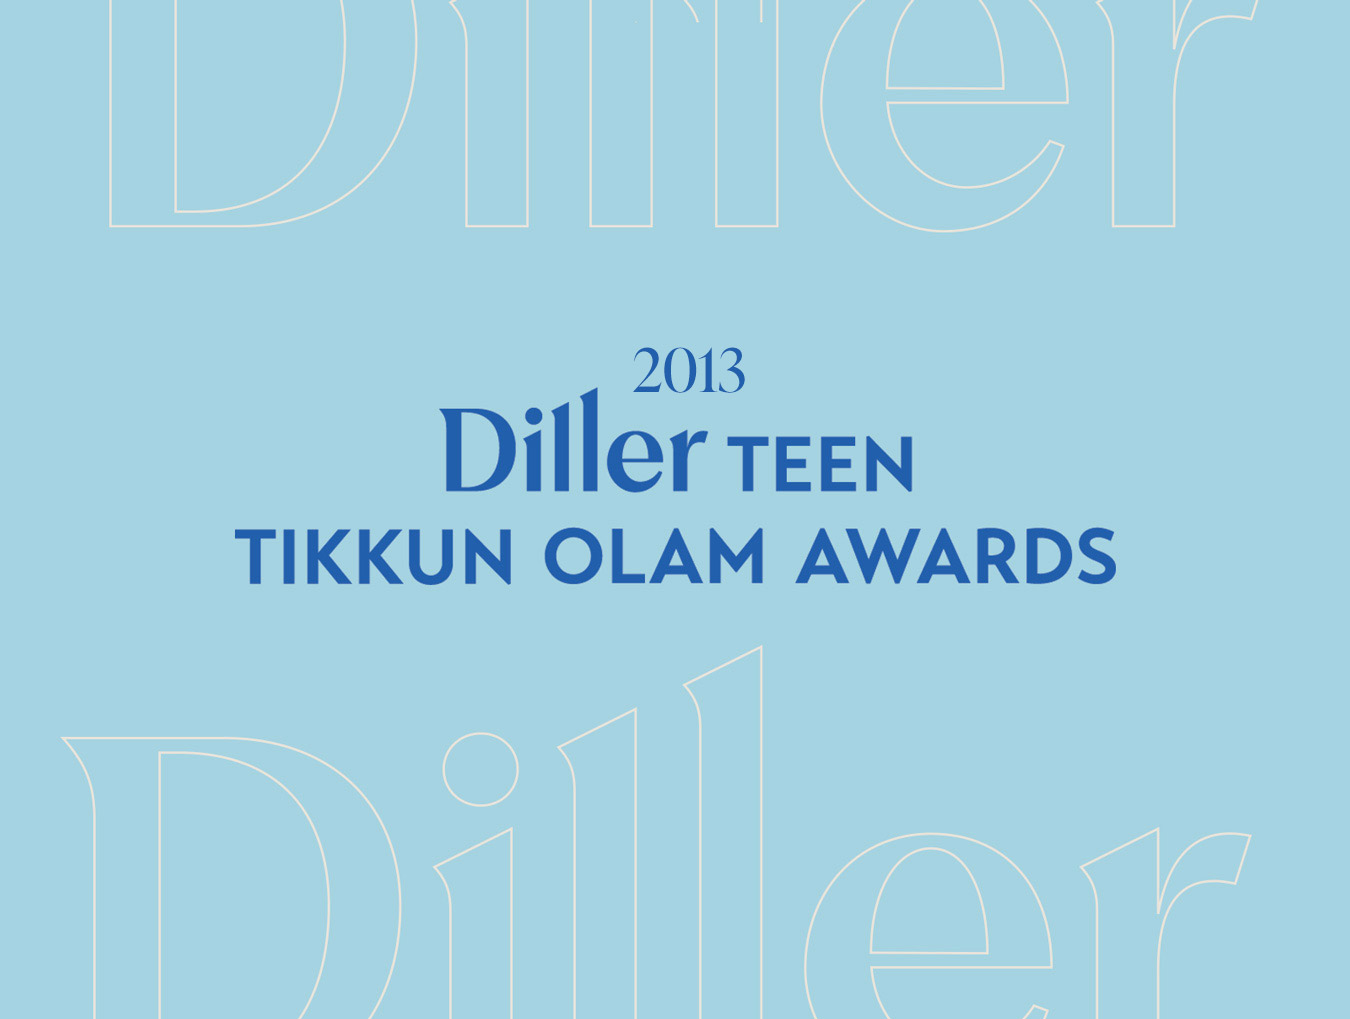 2013 Diller Teen Tikkun Olam Awards video